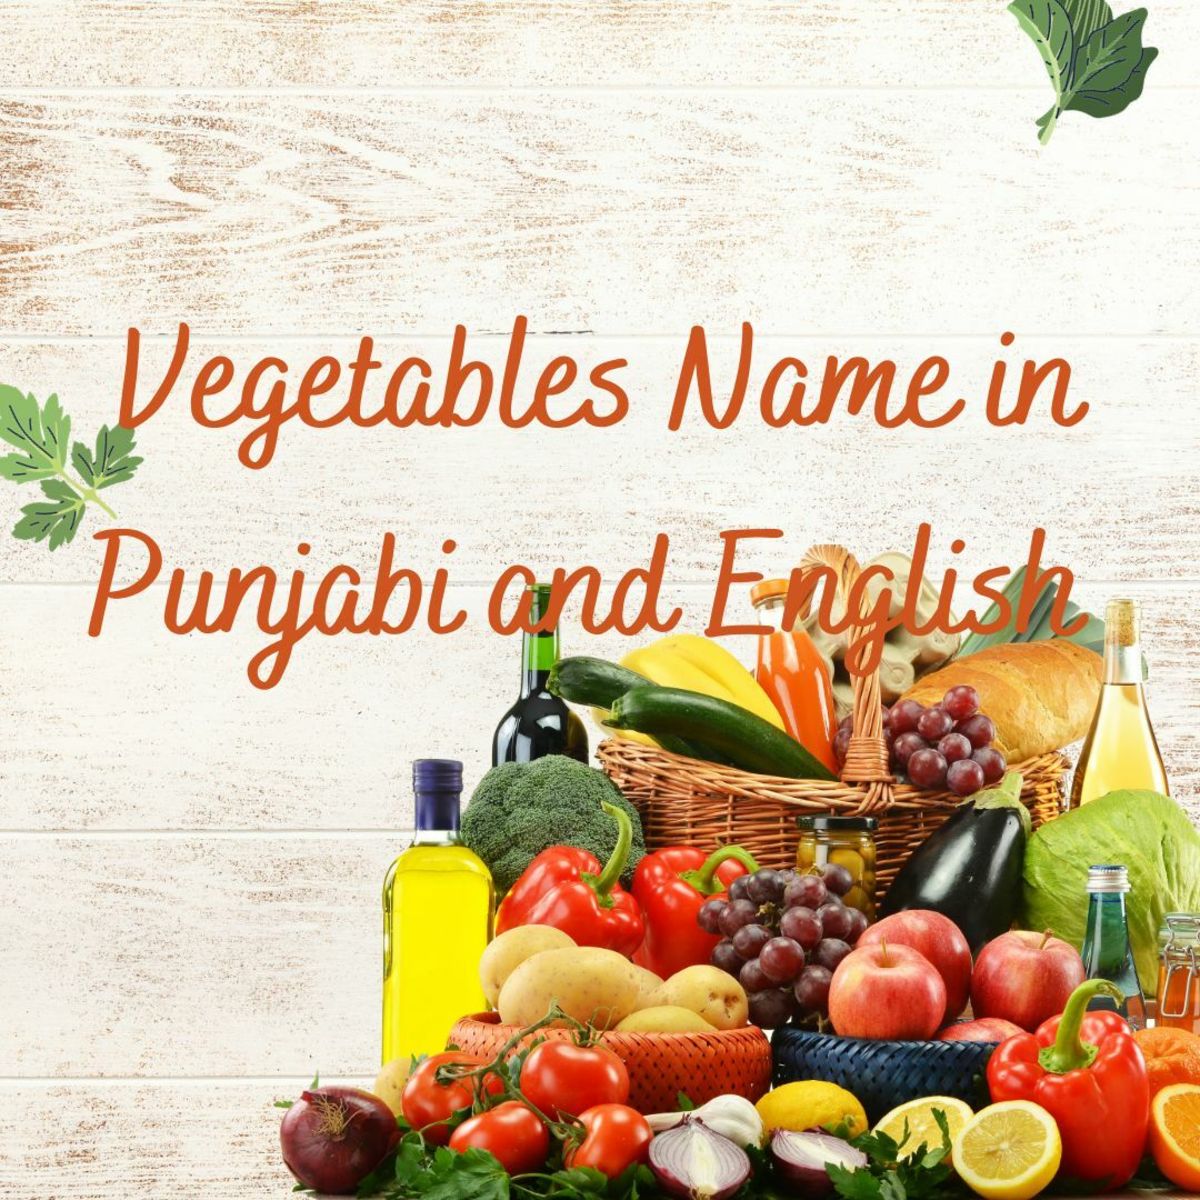 20 Vegetable Names in Punjabi and English